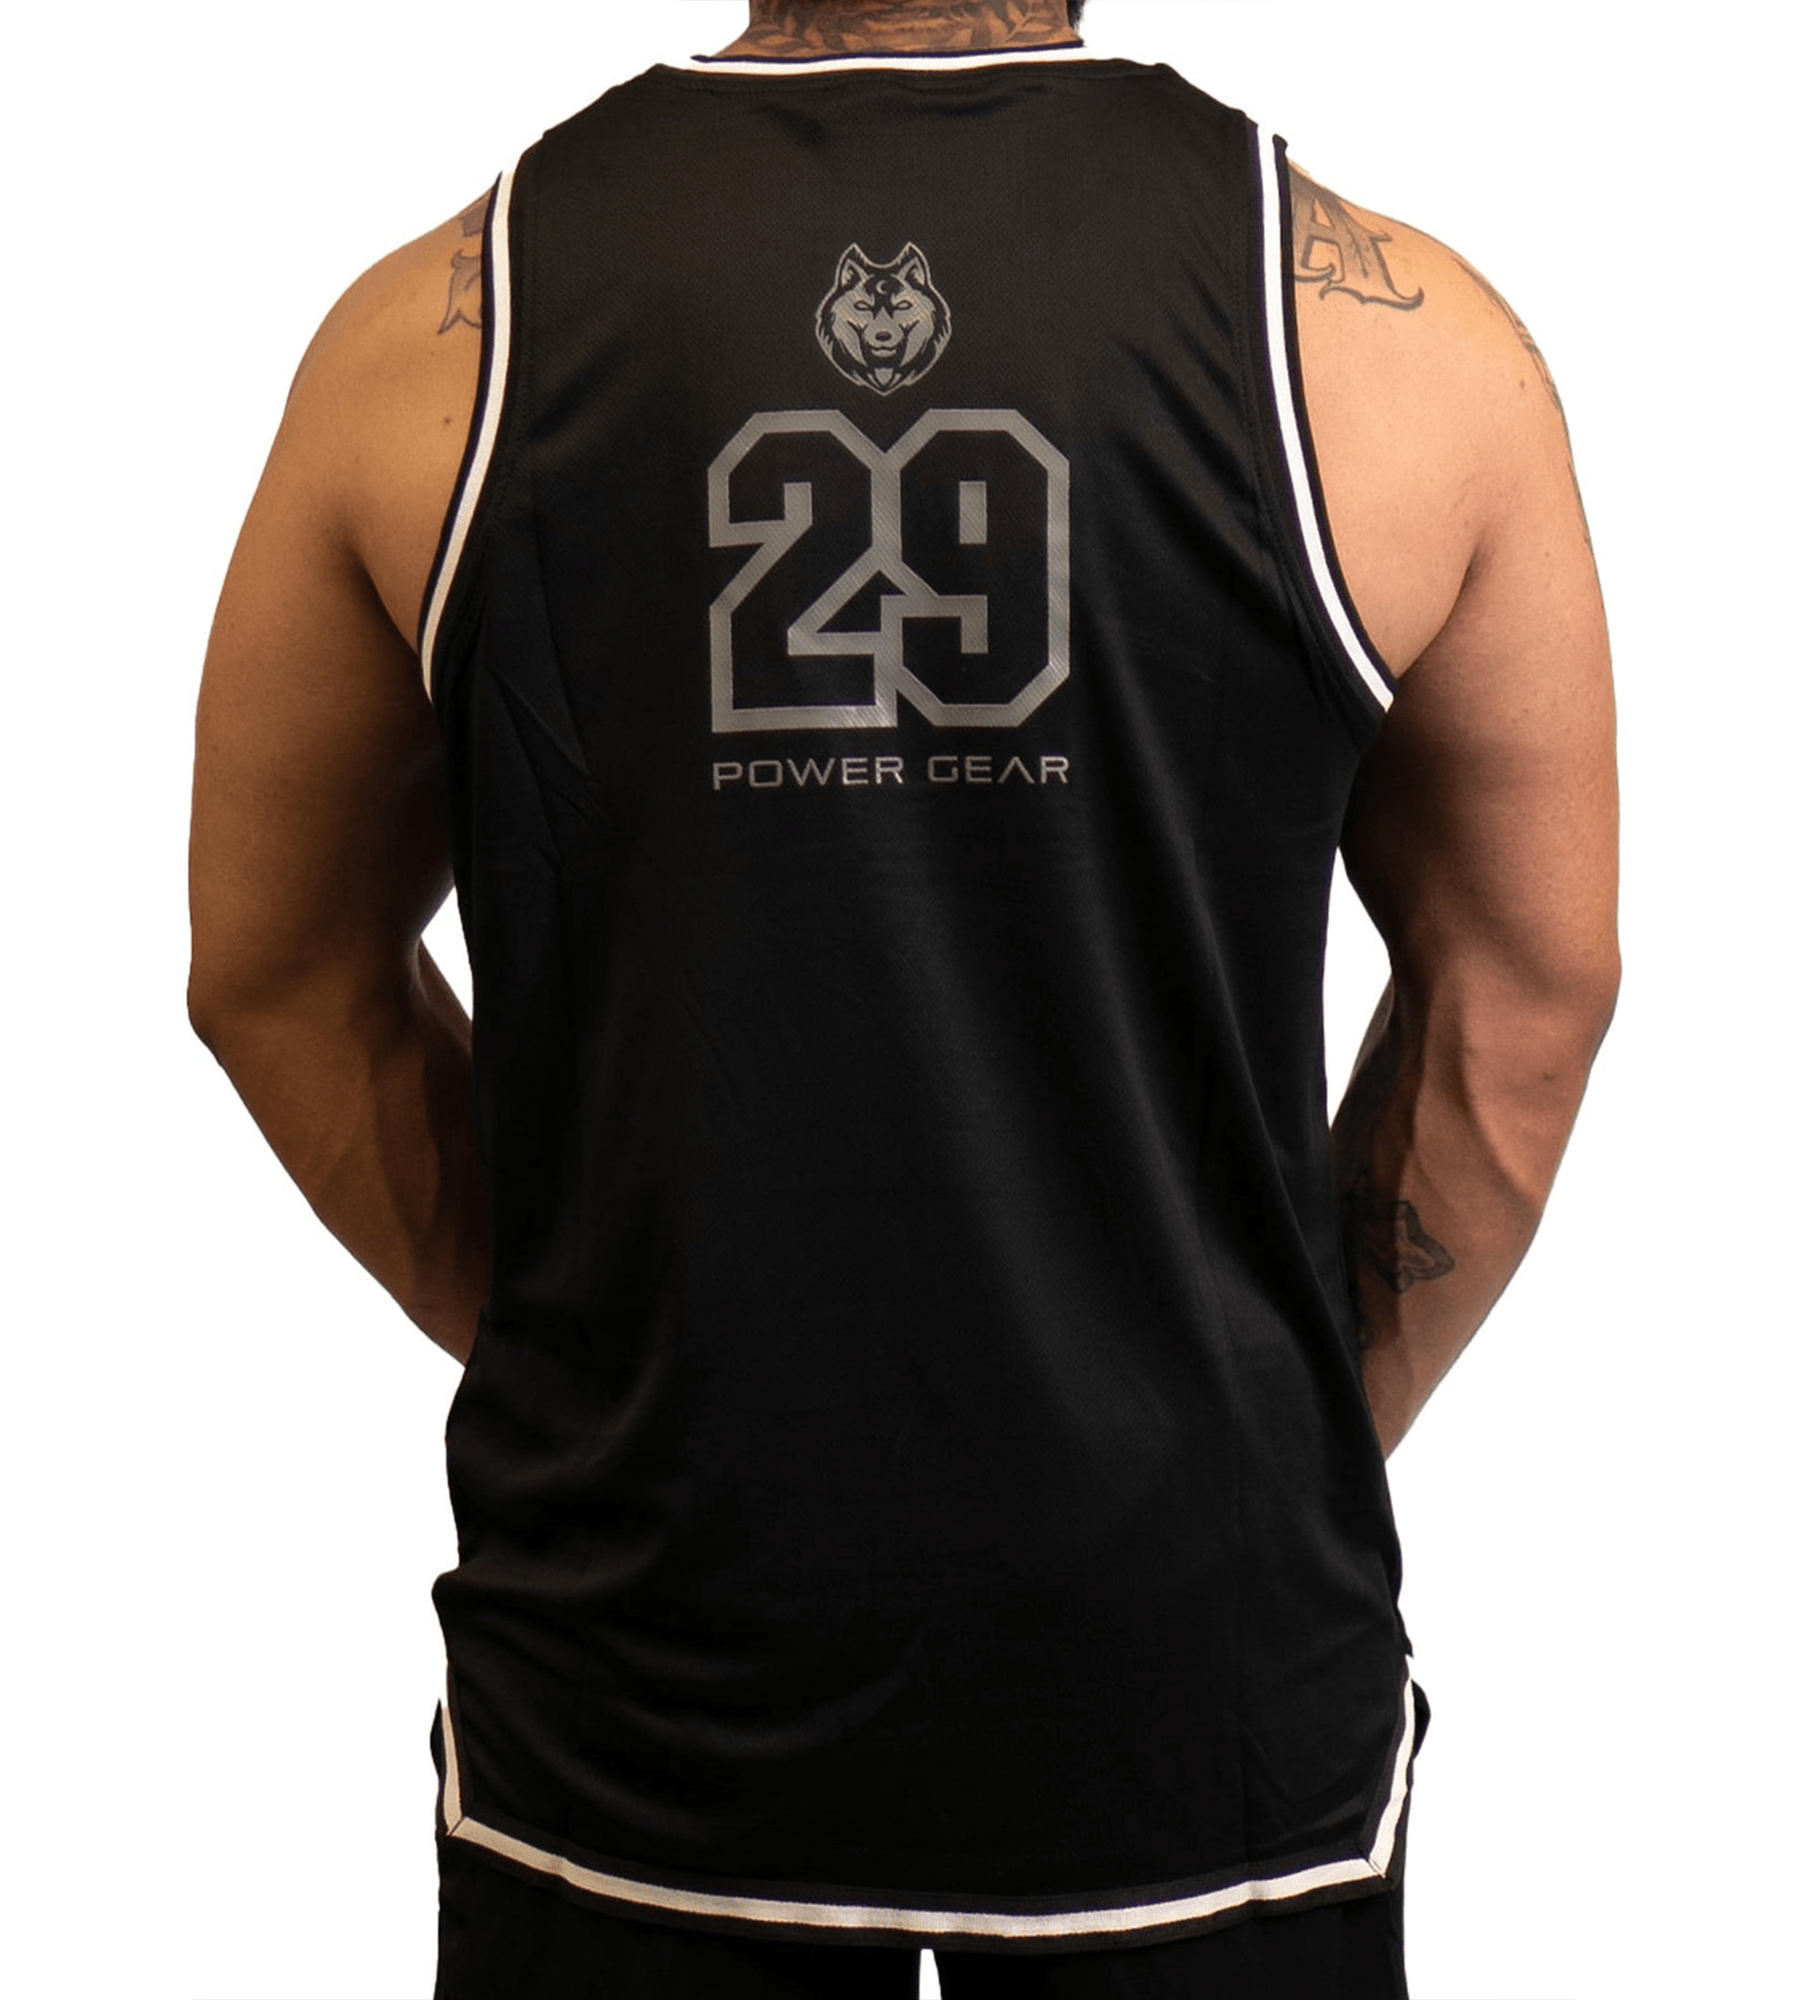 FitnessFox Basketball Singlet - BLACK